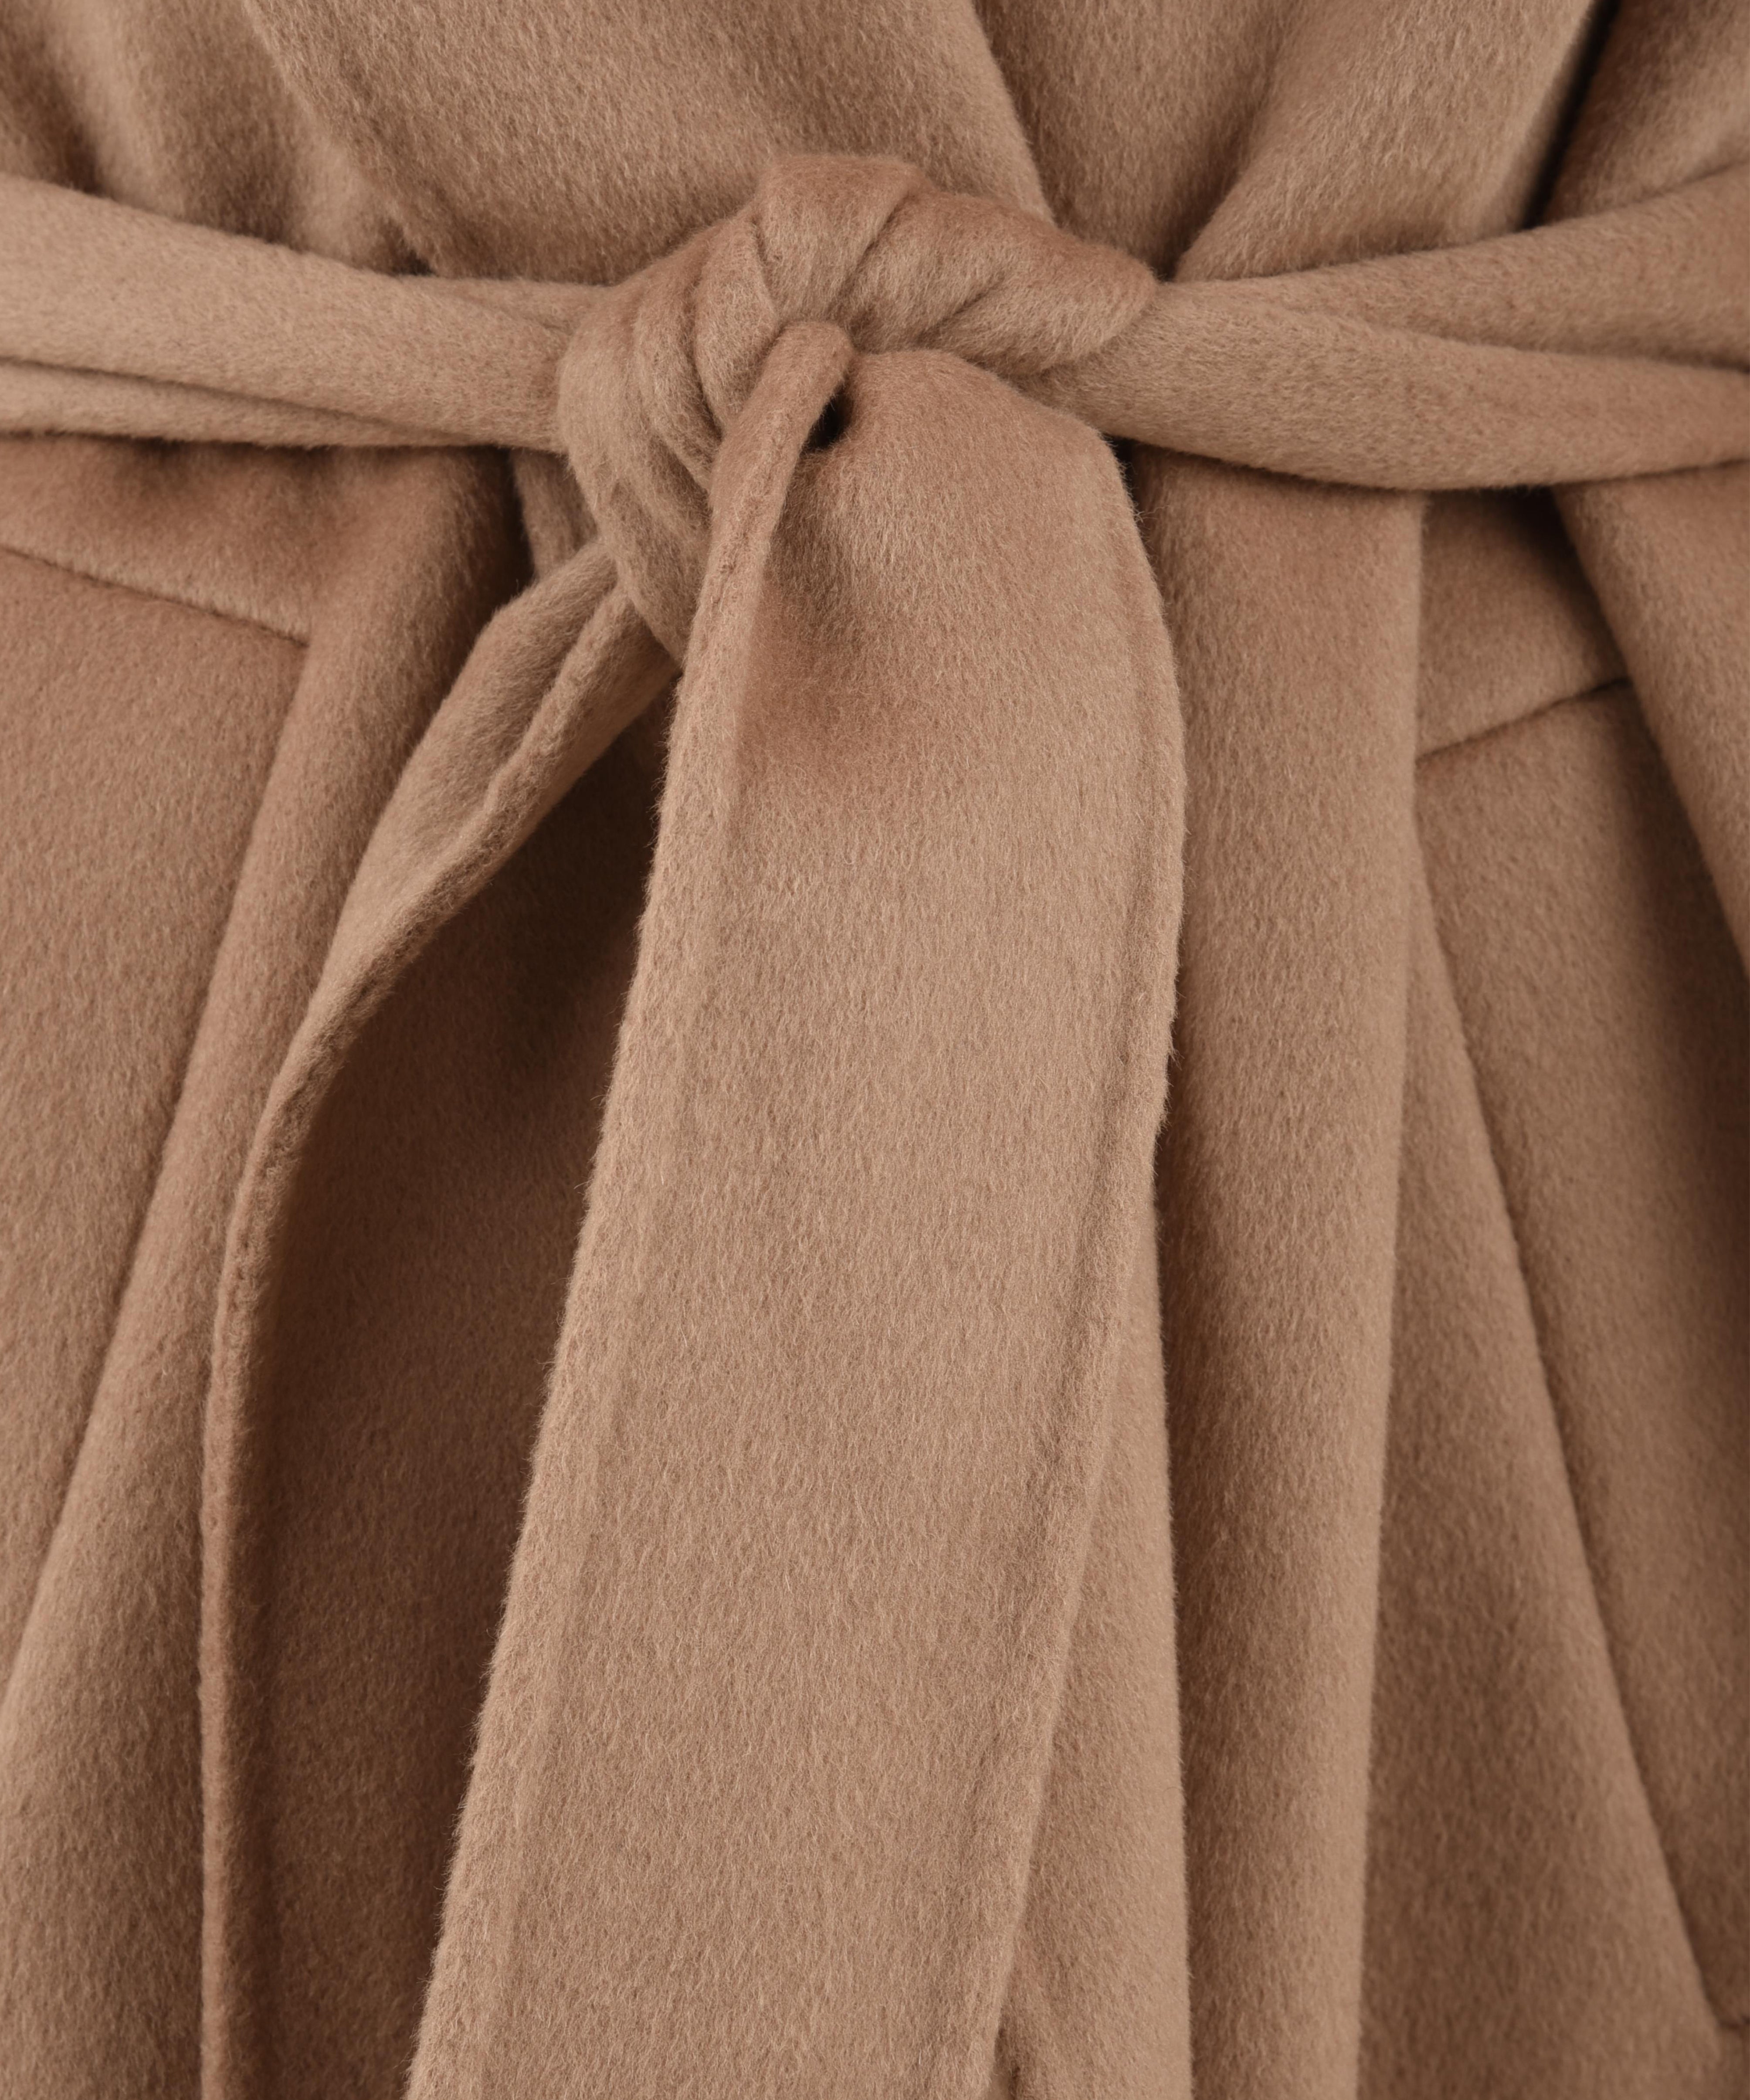 Gilet Donna stile cappotto cammello, Glox, cintura